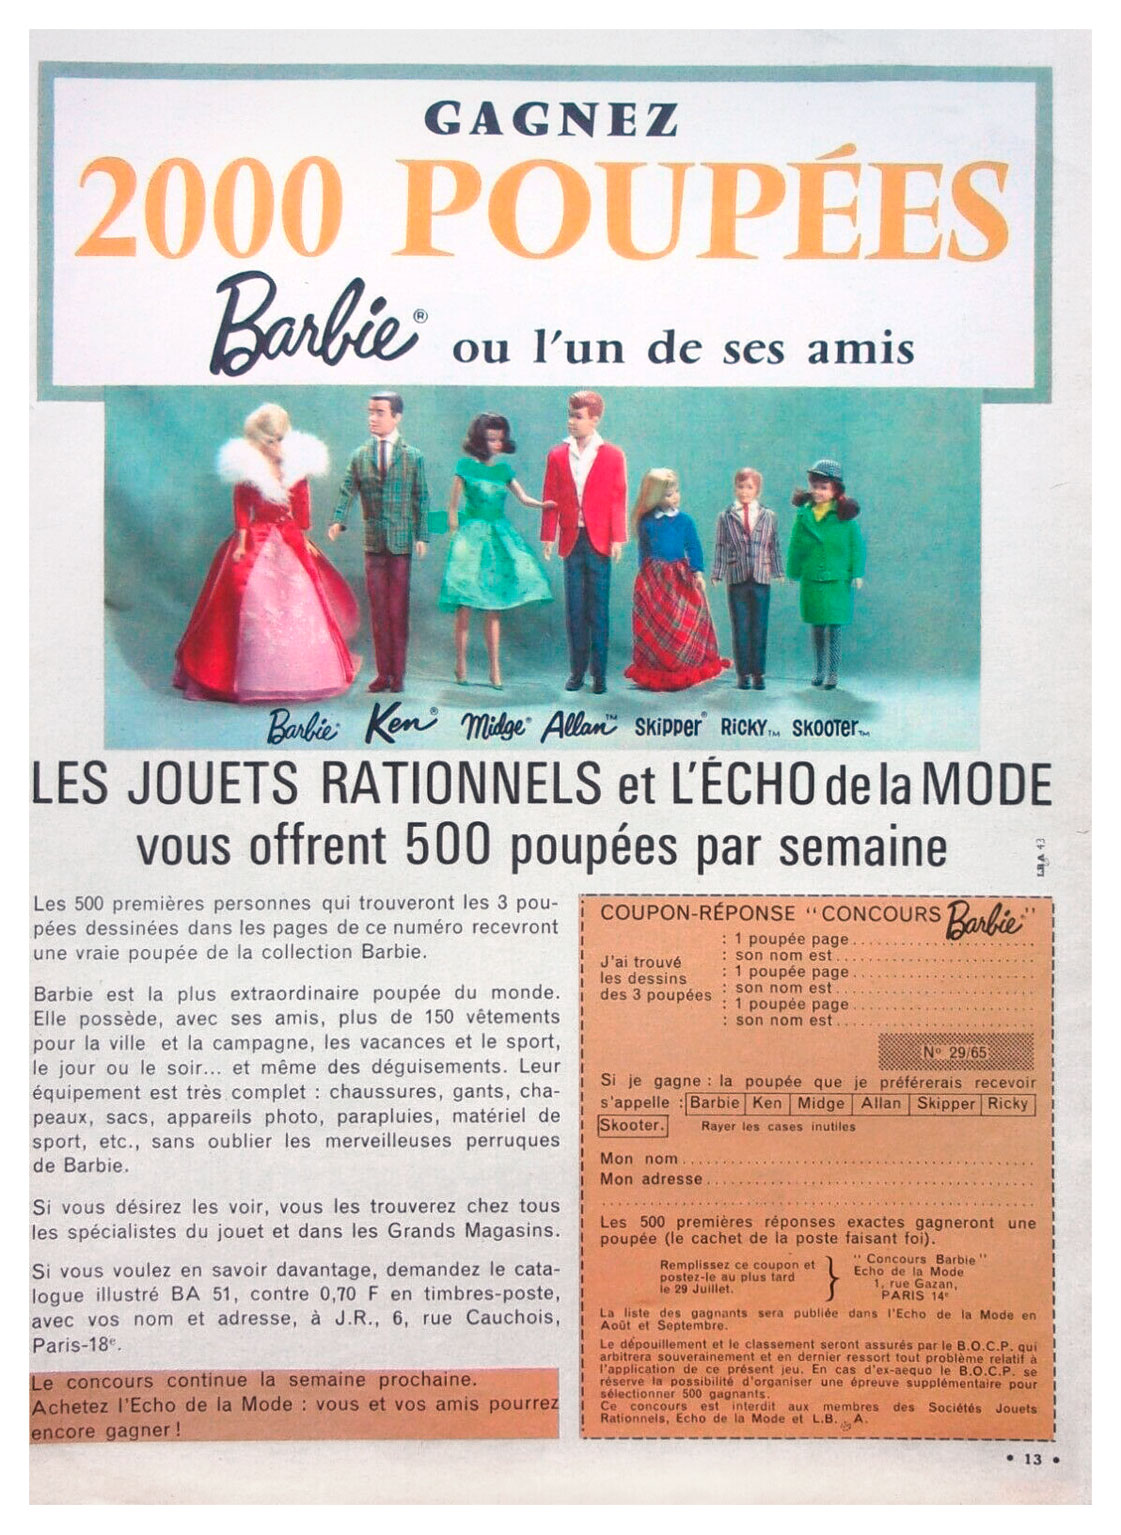 From 1965 French l'Echo de la Mode magazine (18 July)